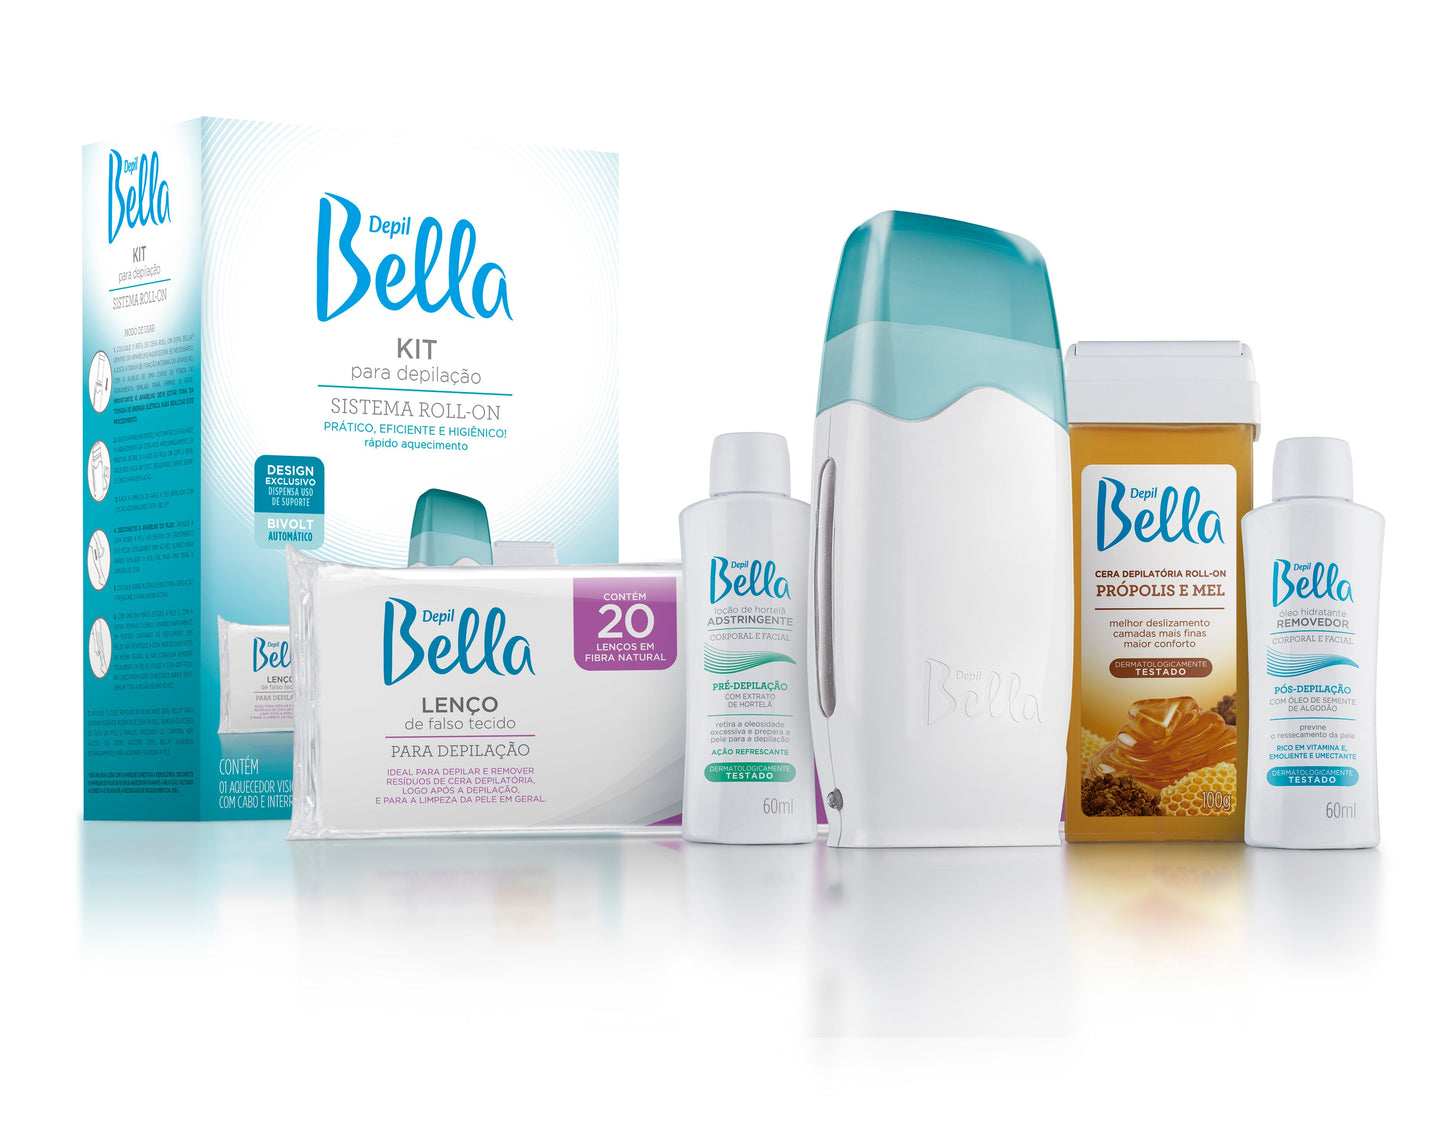 Kit Depil Bella Hair Removal Waxing - - Depilcompany